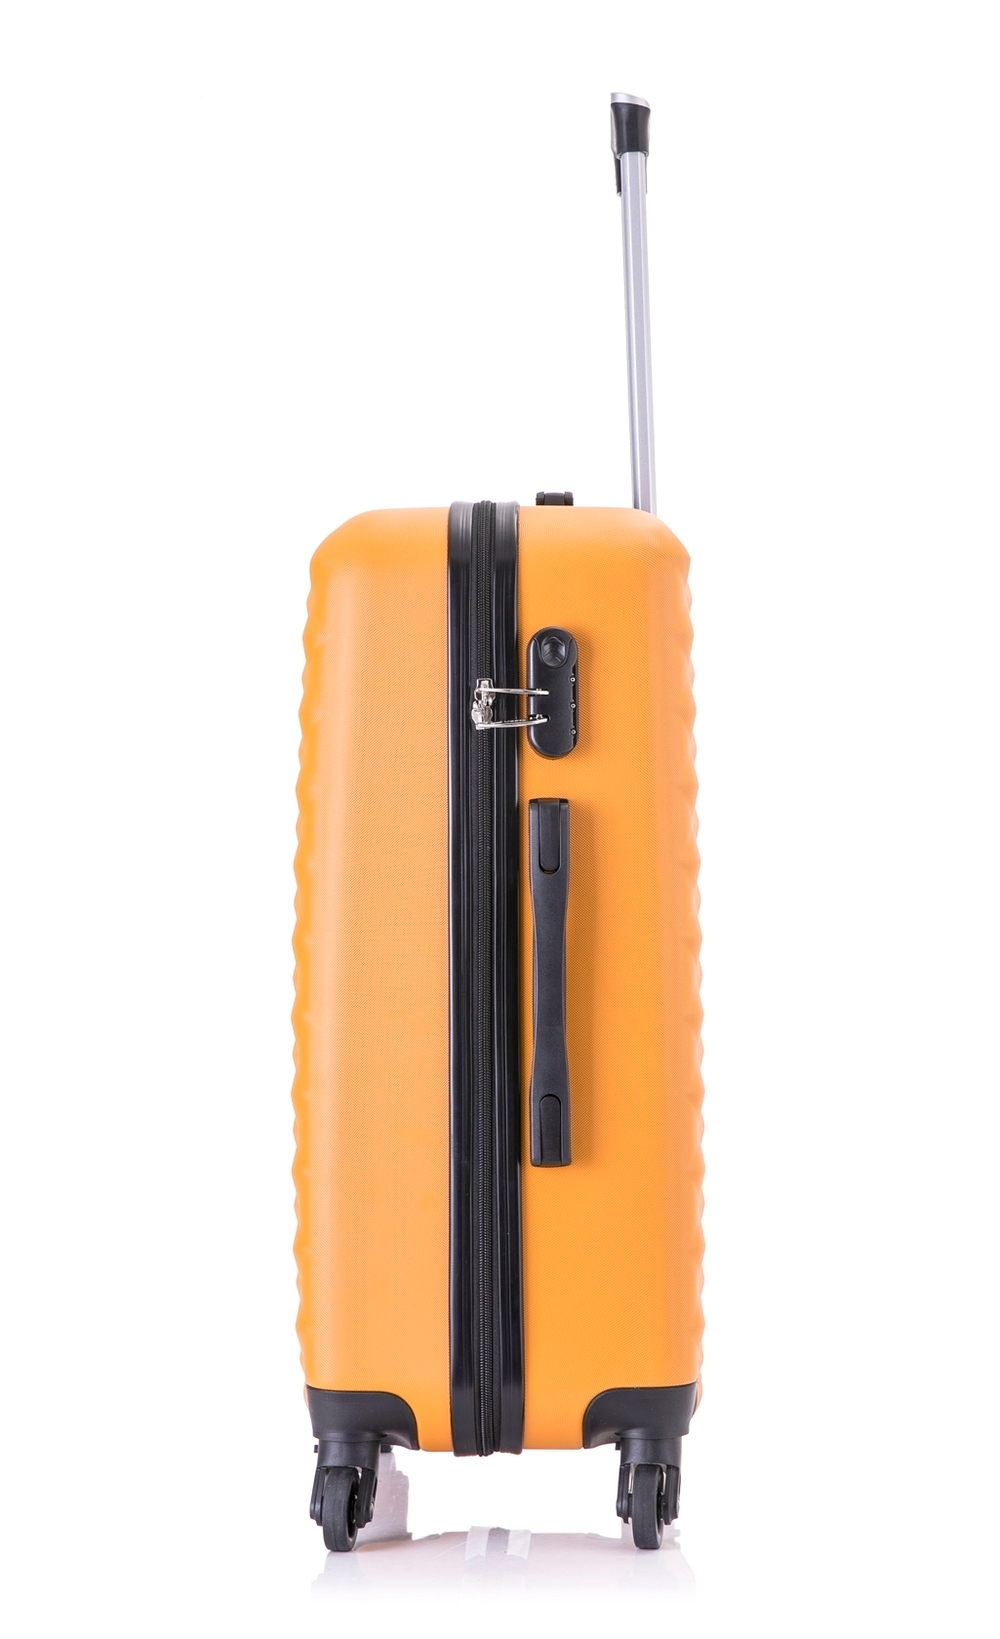 Чемодан на колесах L’case Phatthaya размера L (76х50х29 см), объем 102 литра, вес 3,8 кг, Оранжевый